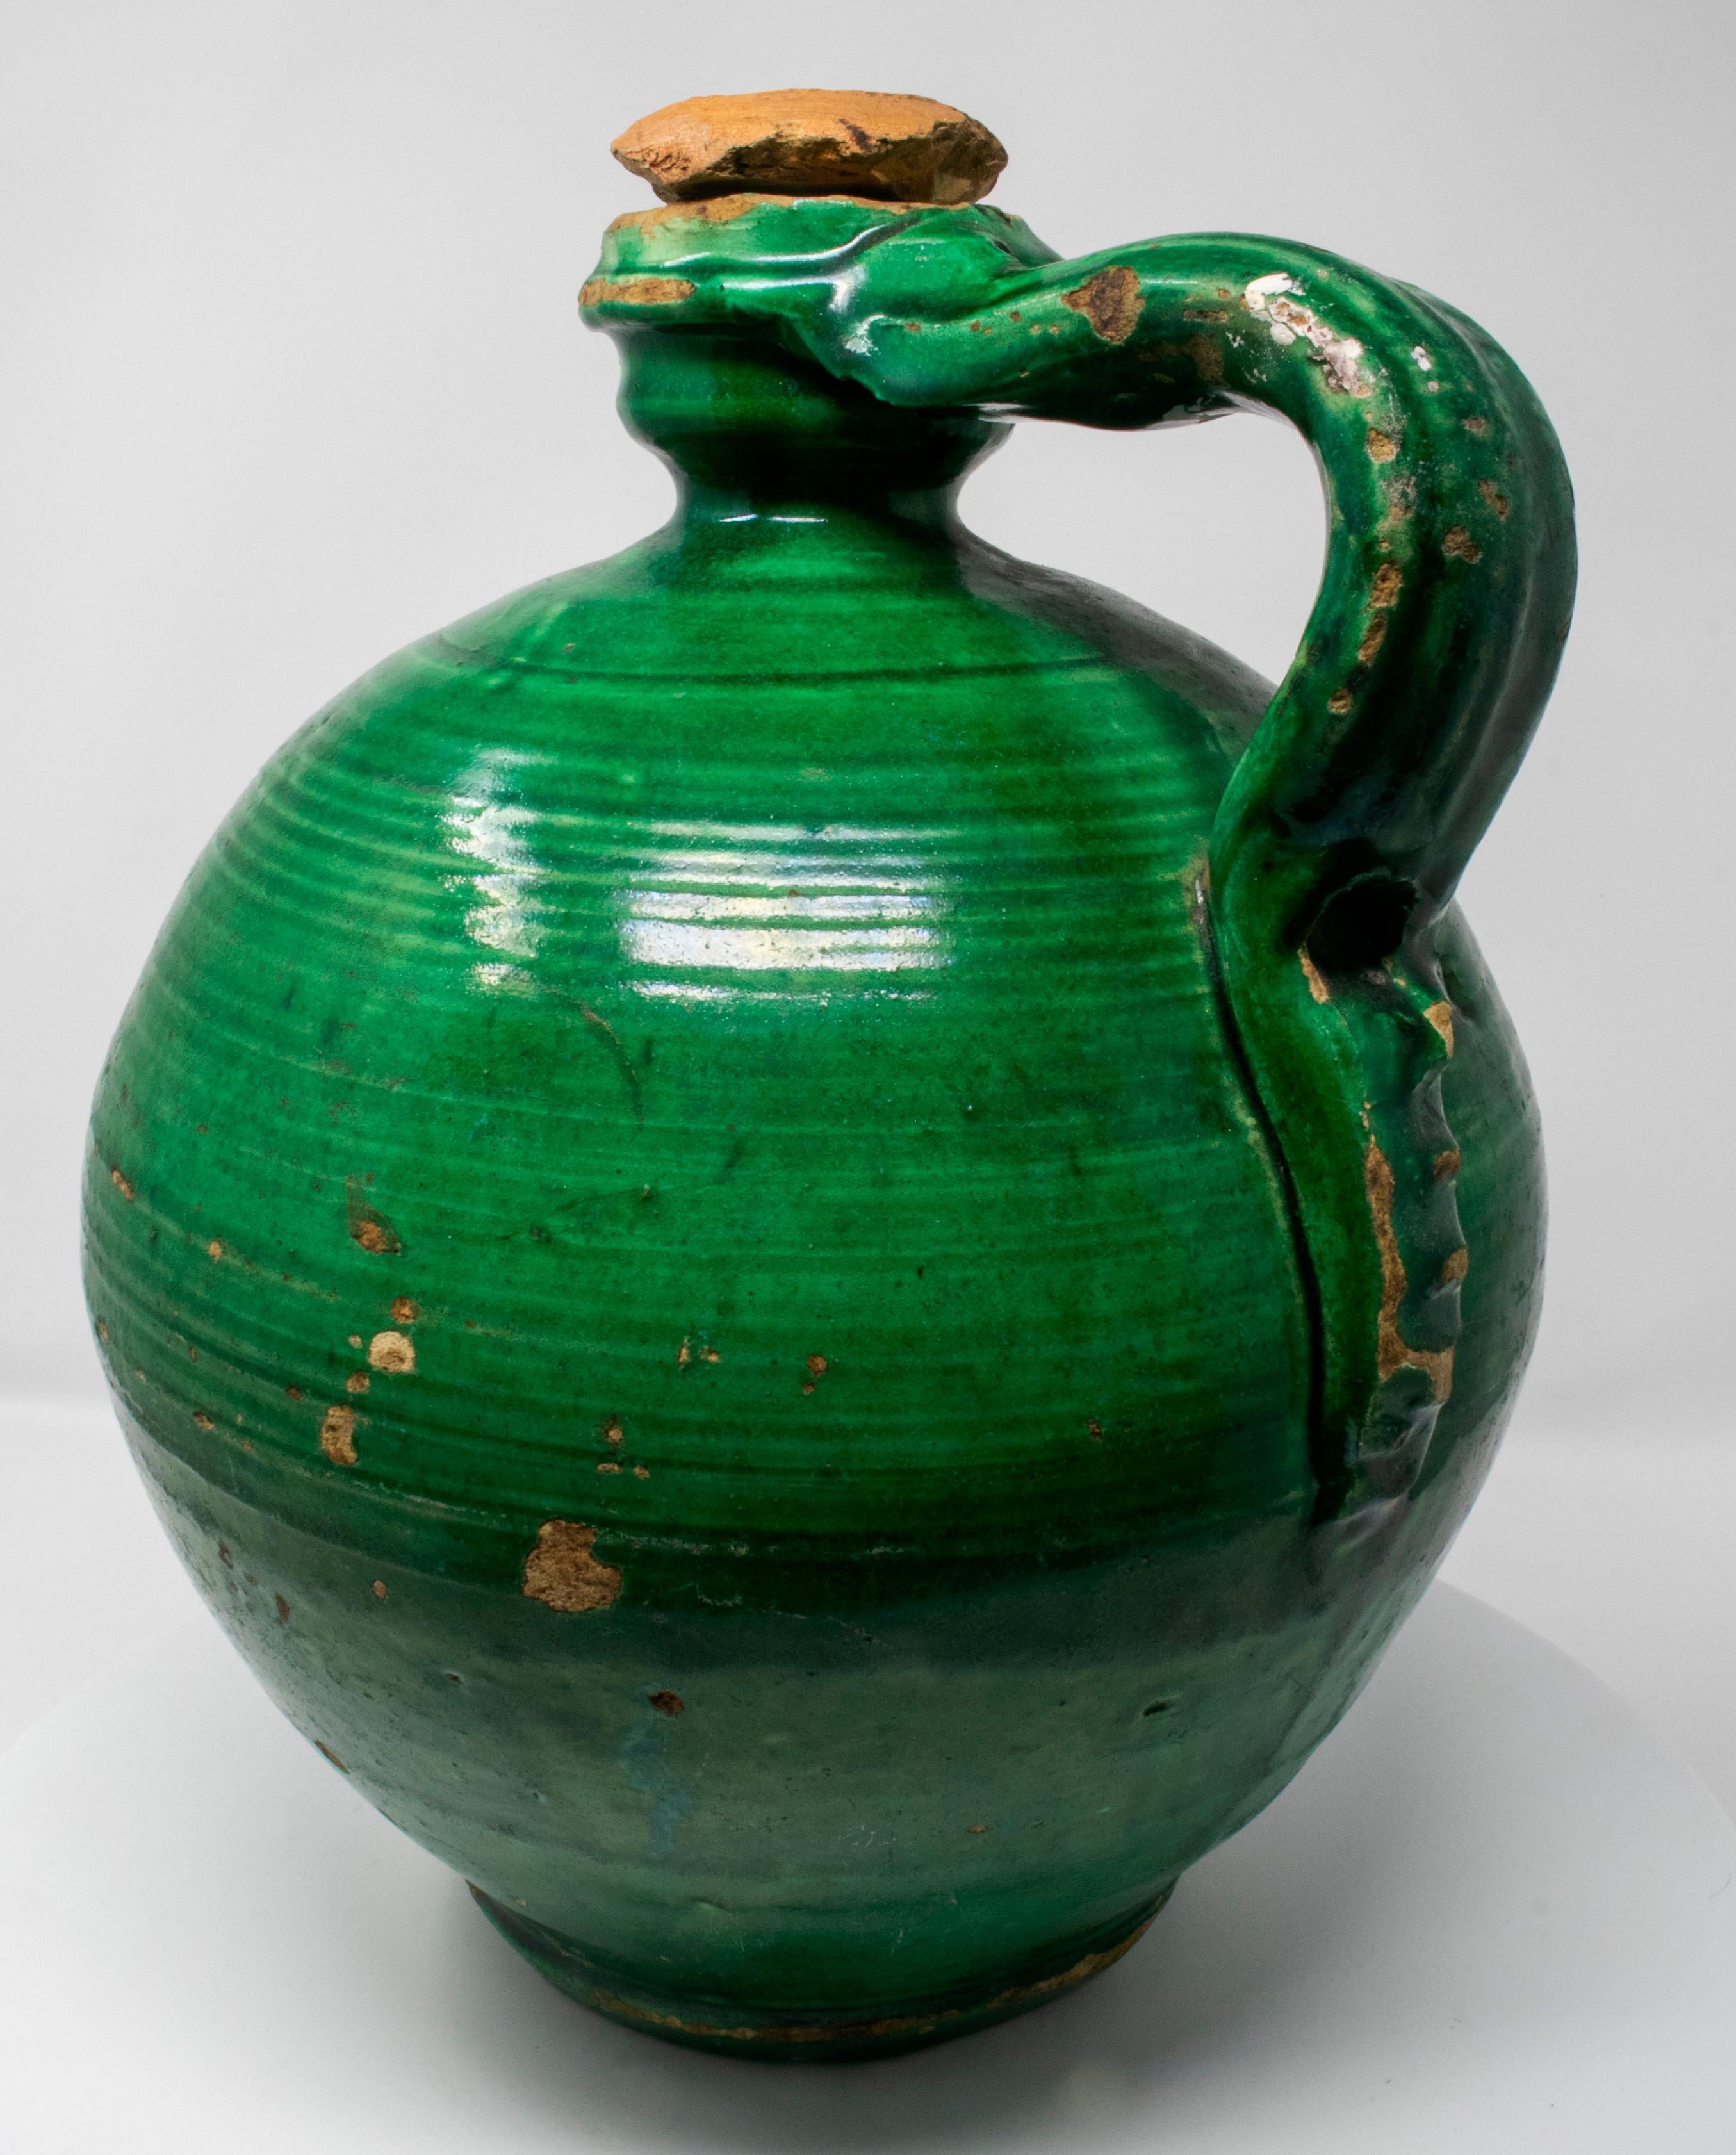 19th century Spanish green glazed closed vase with original lid.